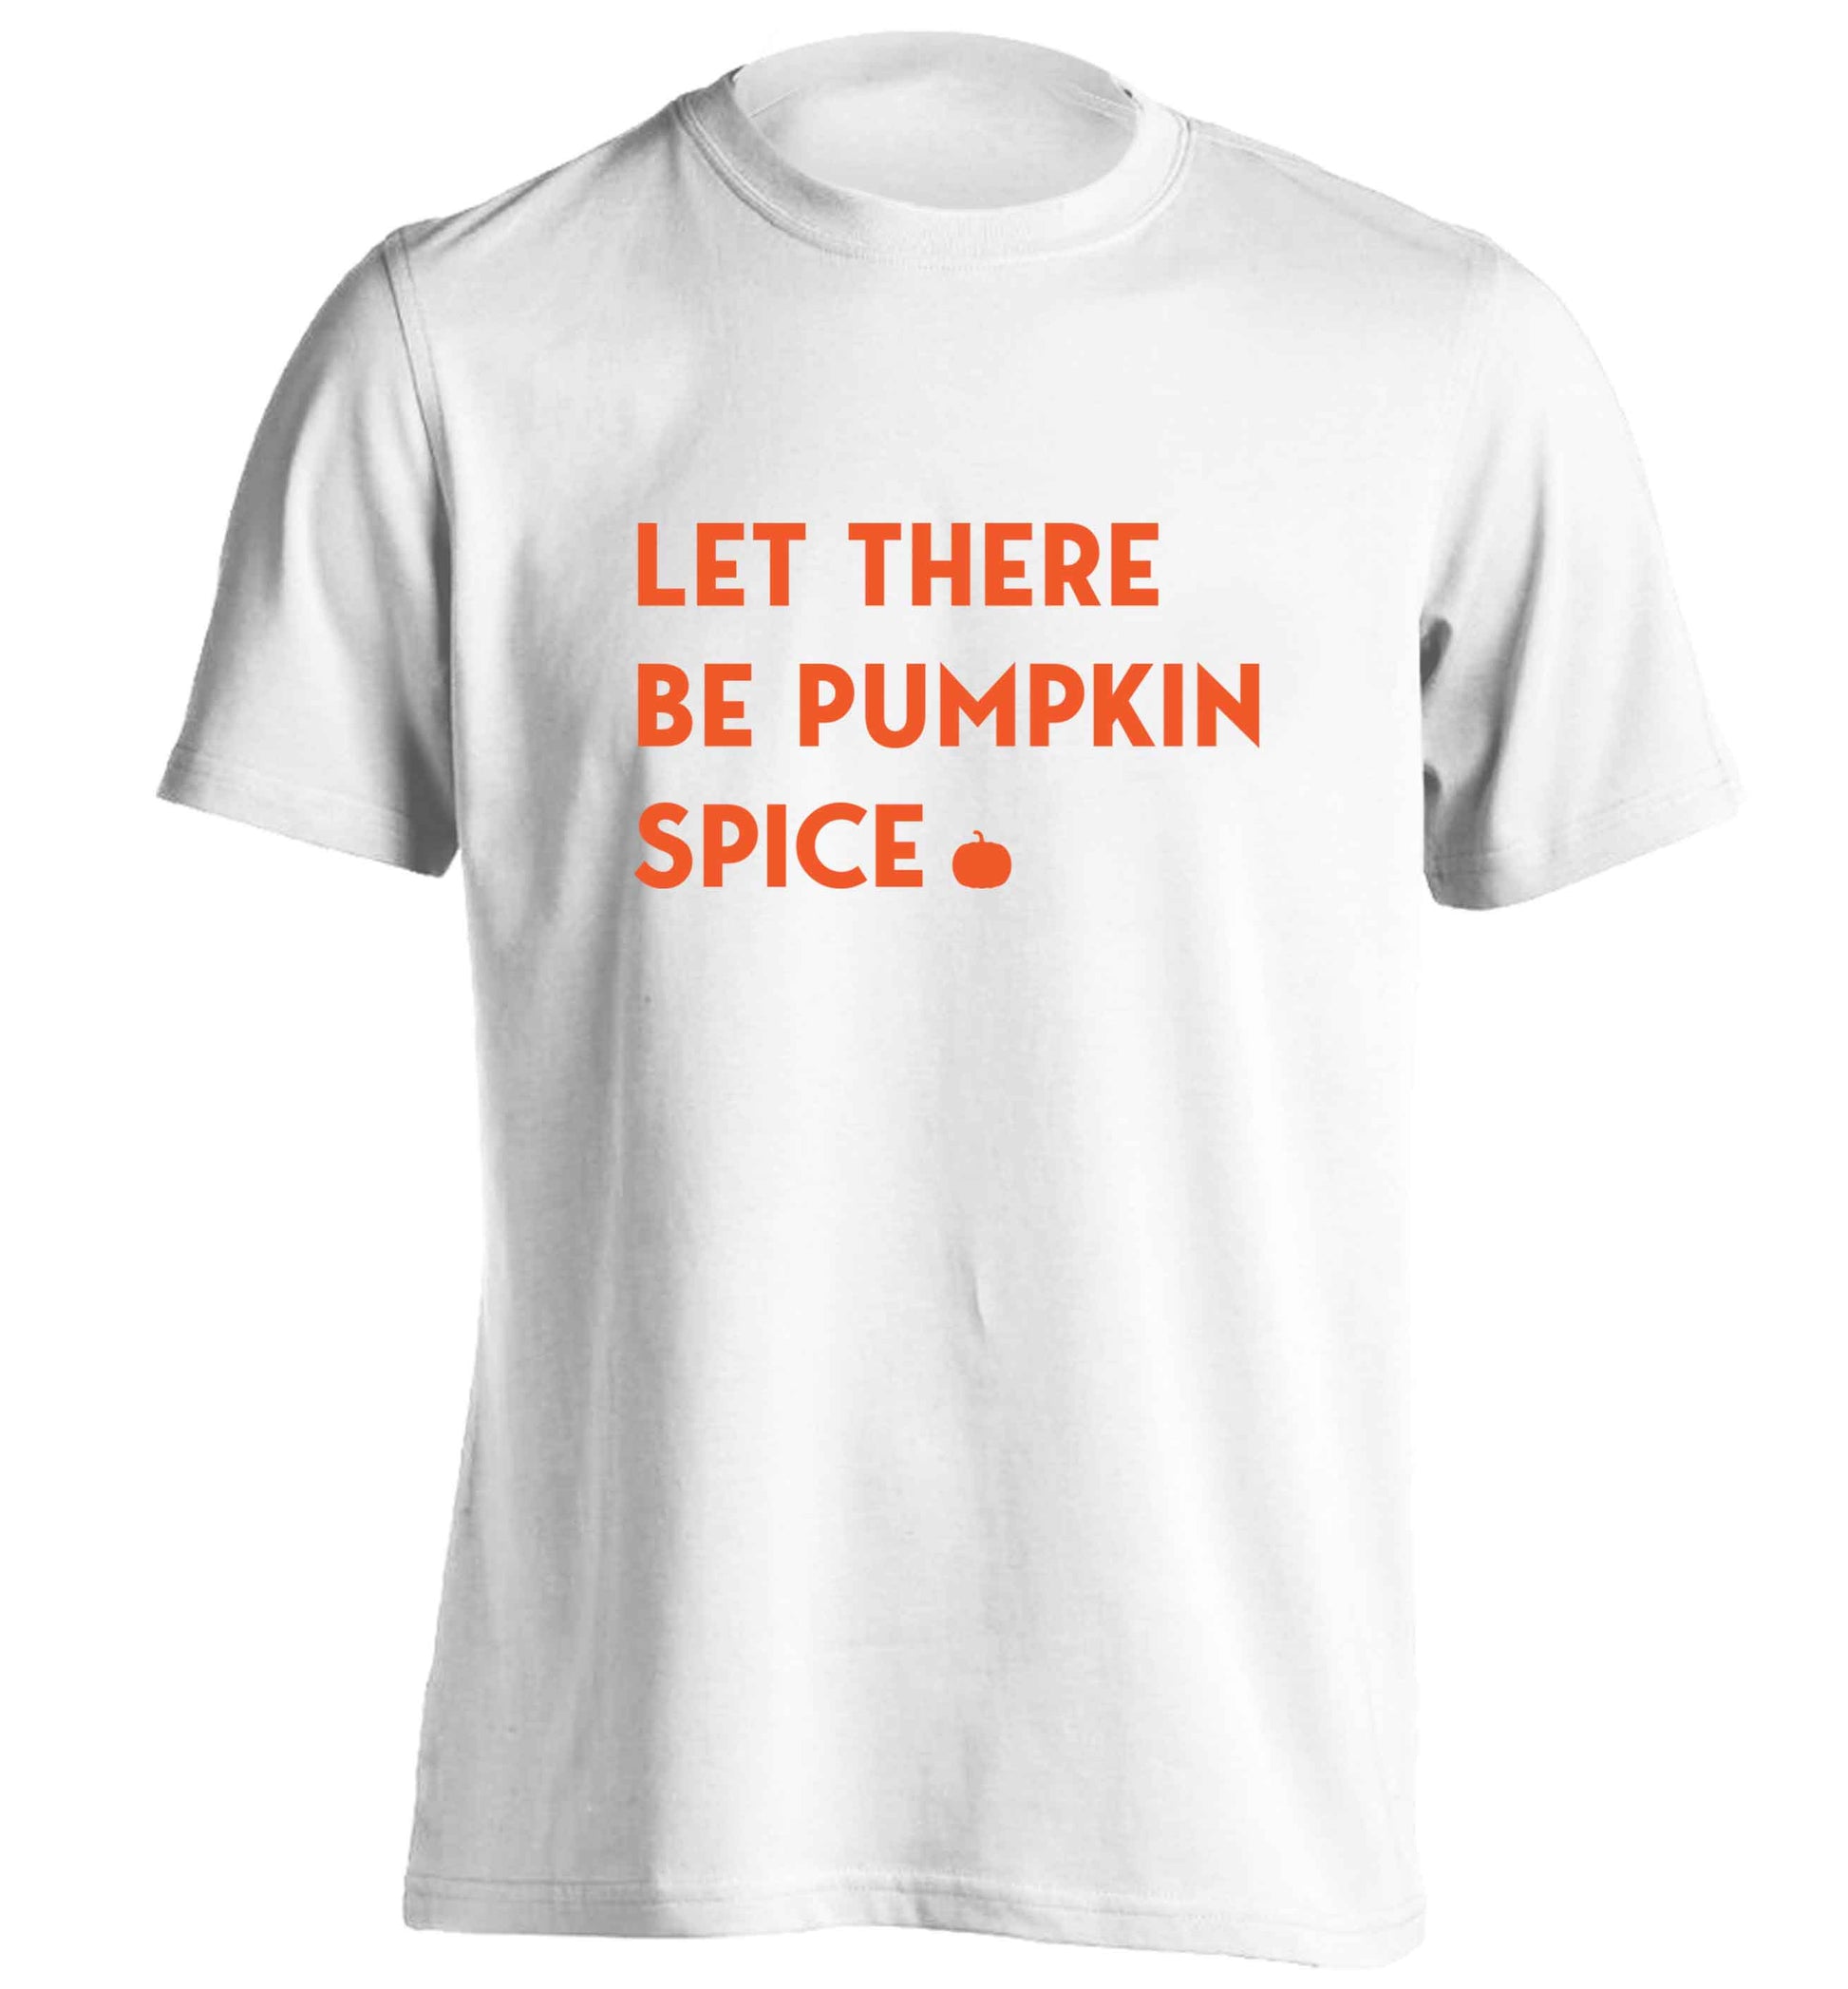 Let Be Pumpkin Spice adults unisex white Tshirt 2XL